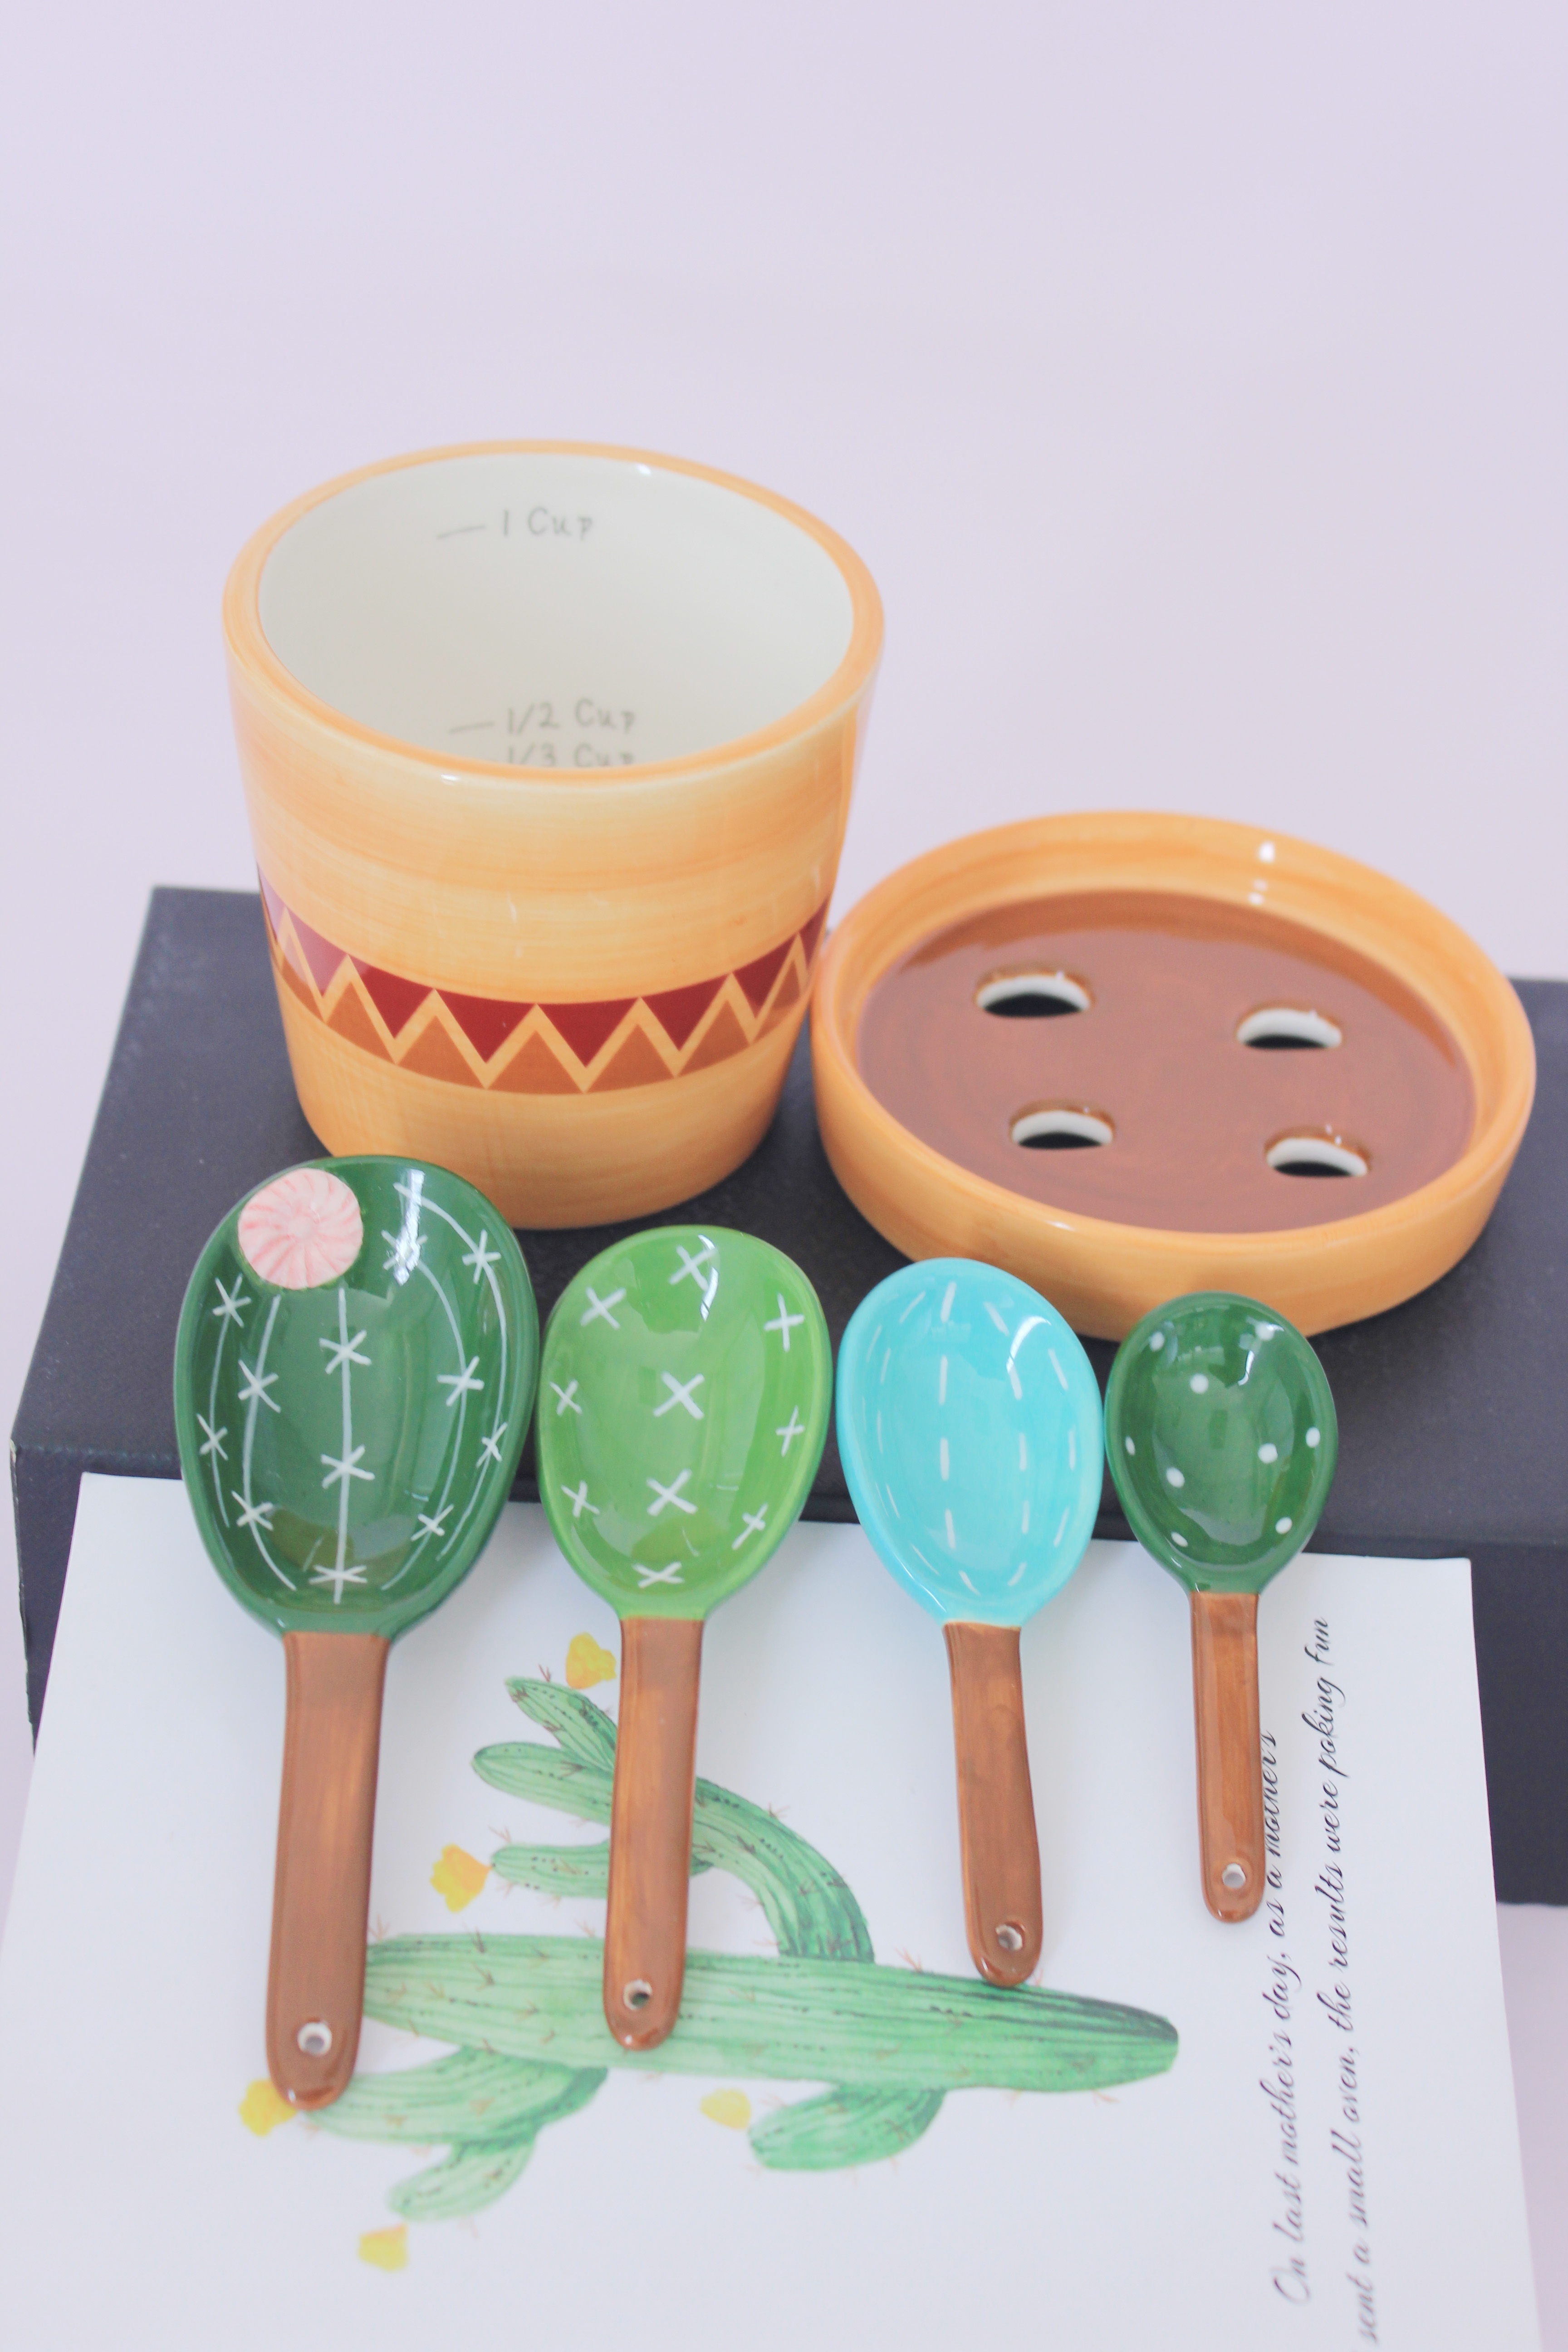 Ceramic Cactus Measuring Spoons and Cups, Cute Measuring Spoons Set in Pot